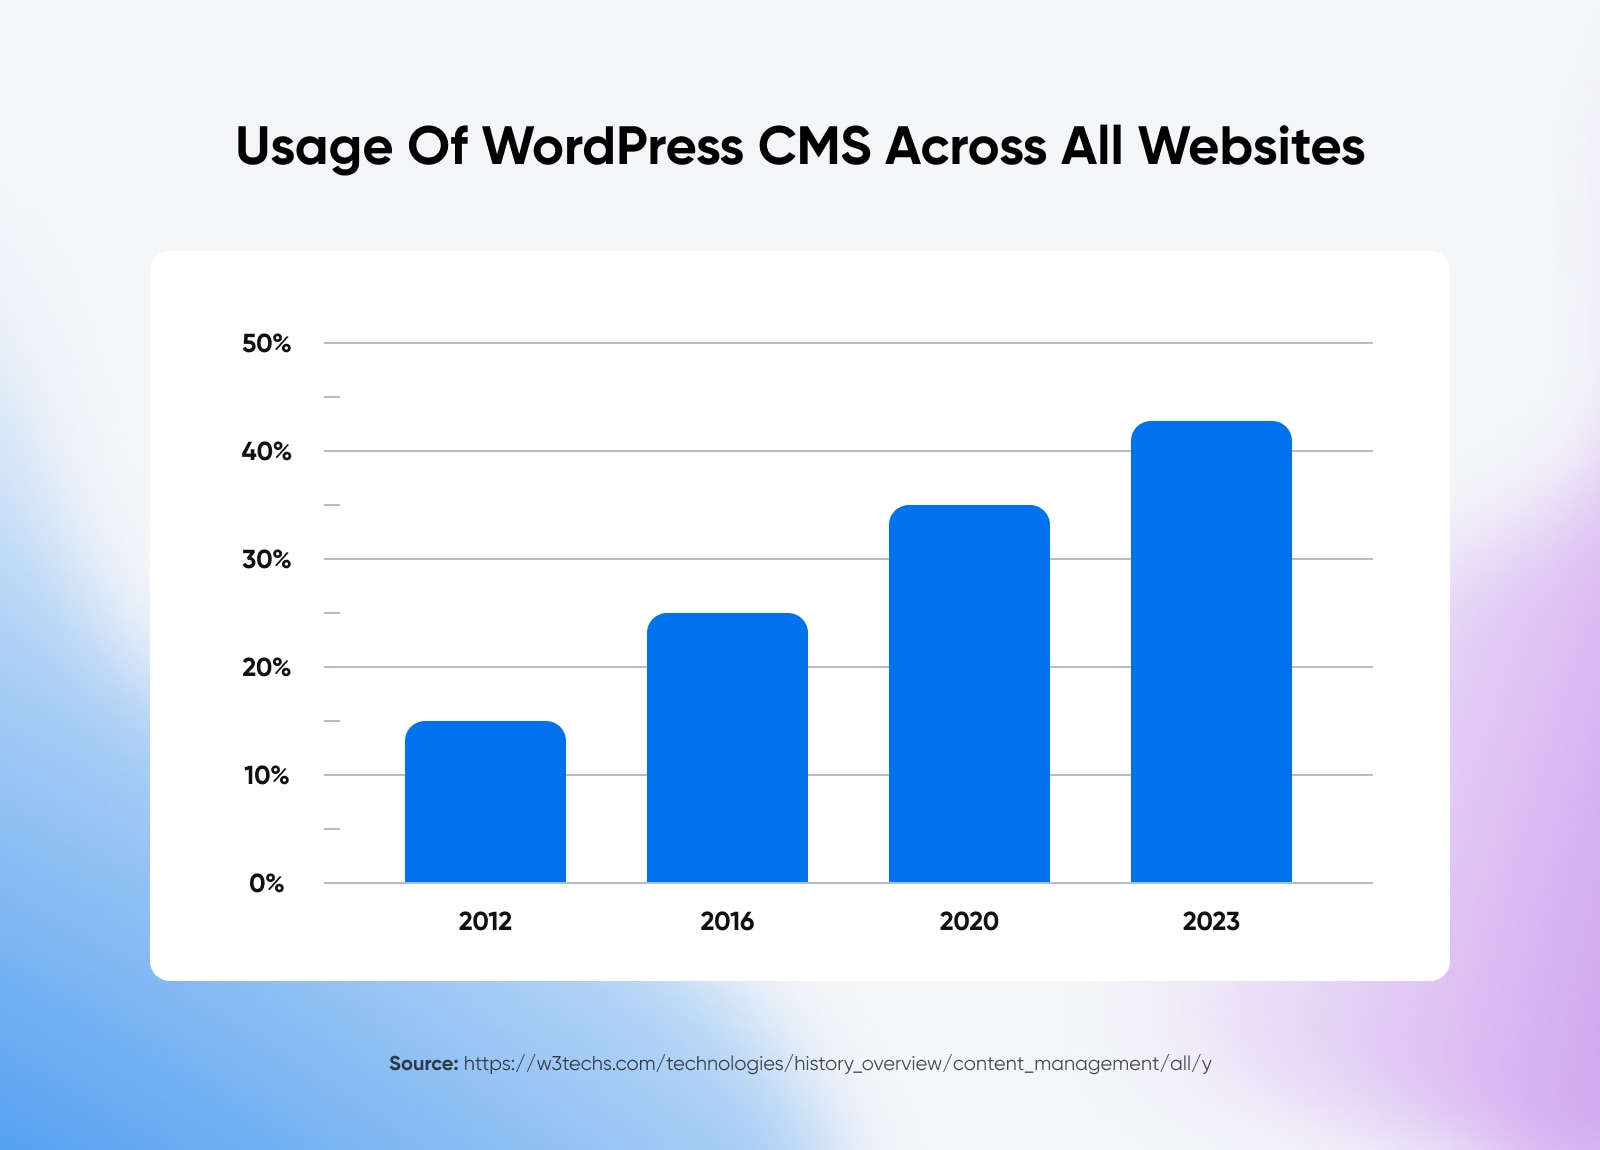 Usage of WordPress CMS Across All Websites